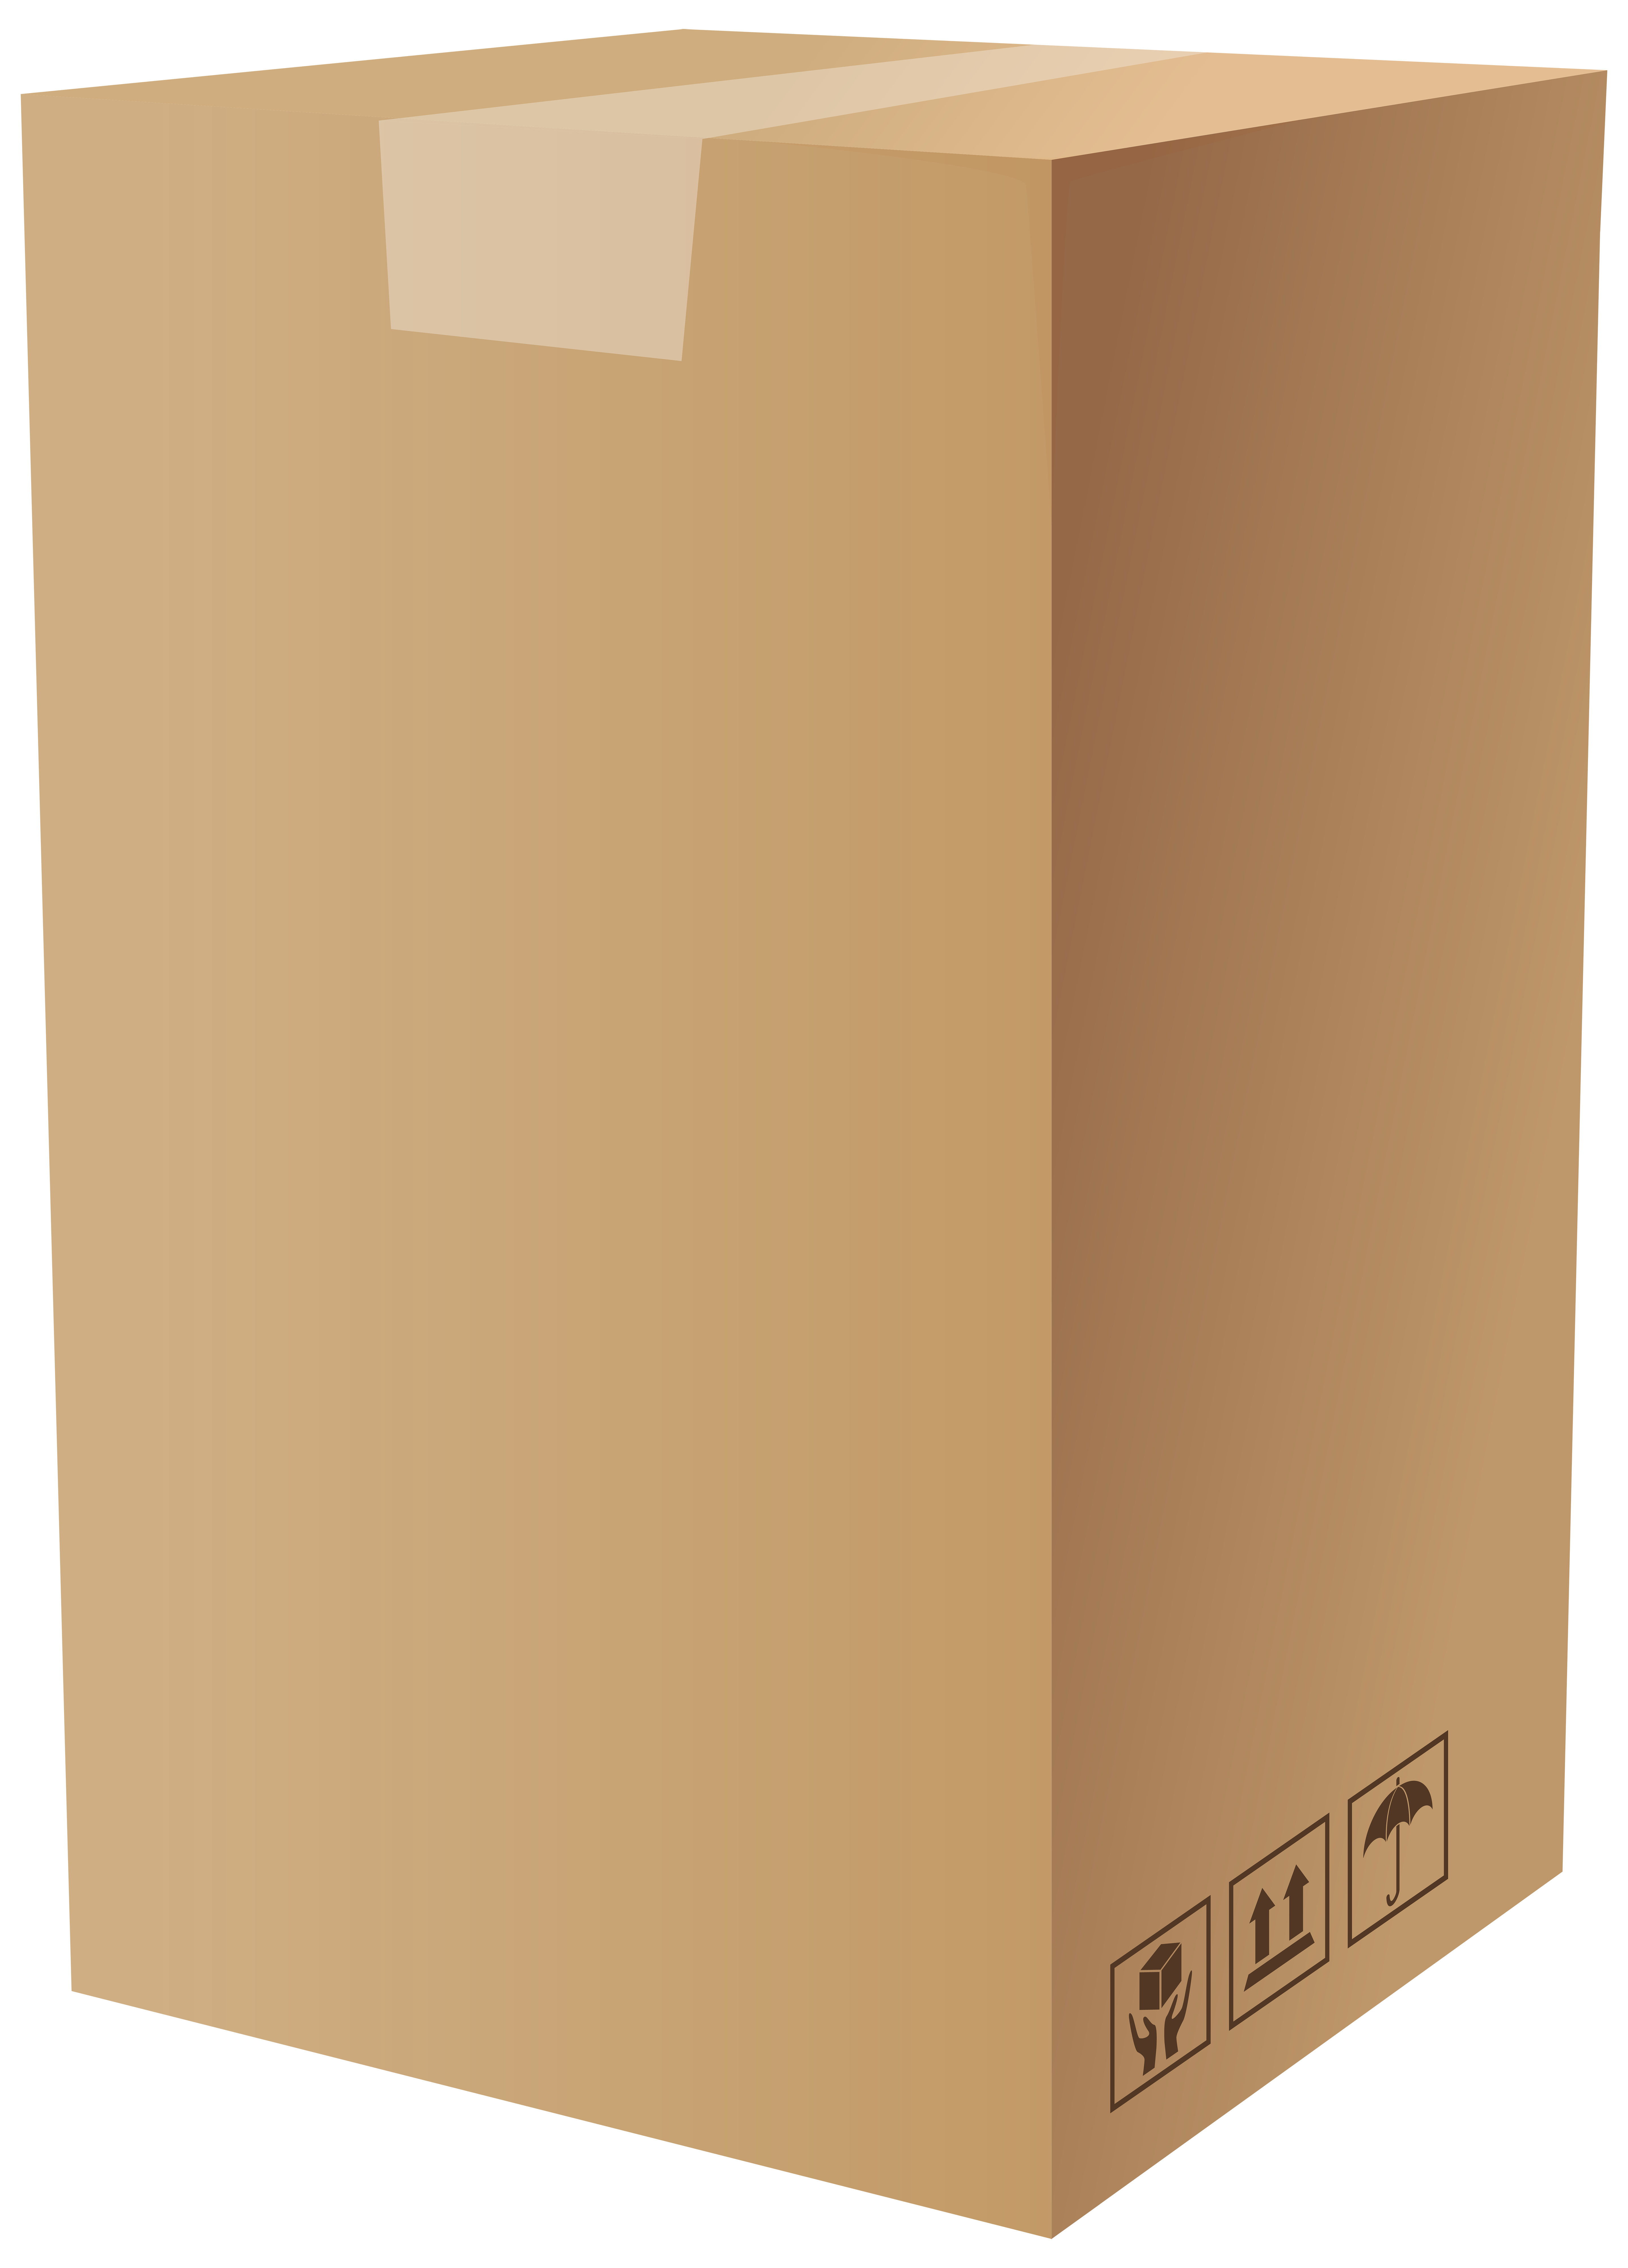 Carton Box PNG Clip Art - Best WEB Clipart